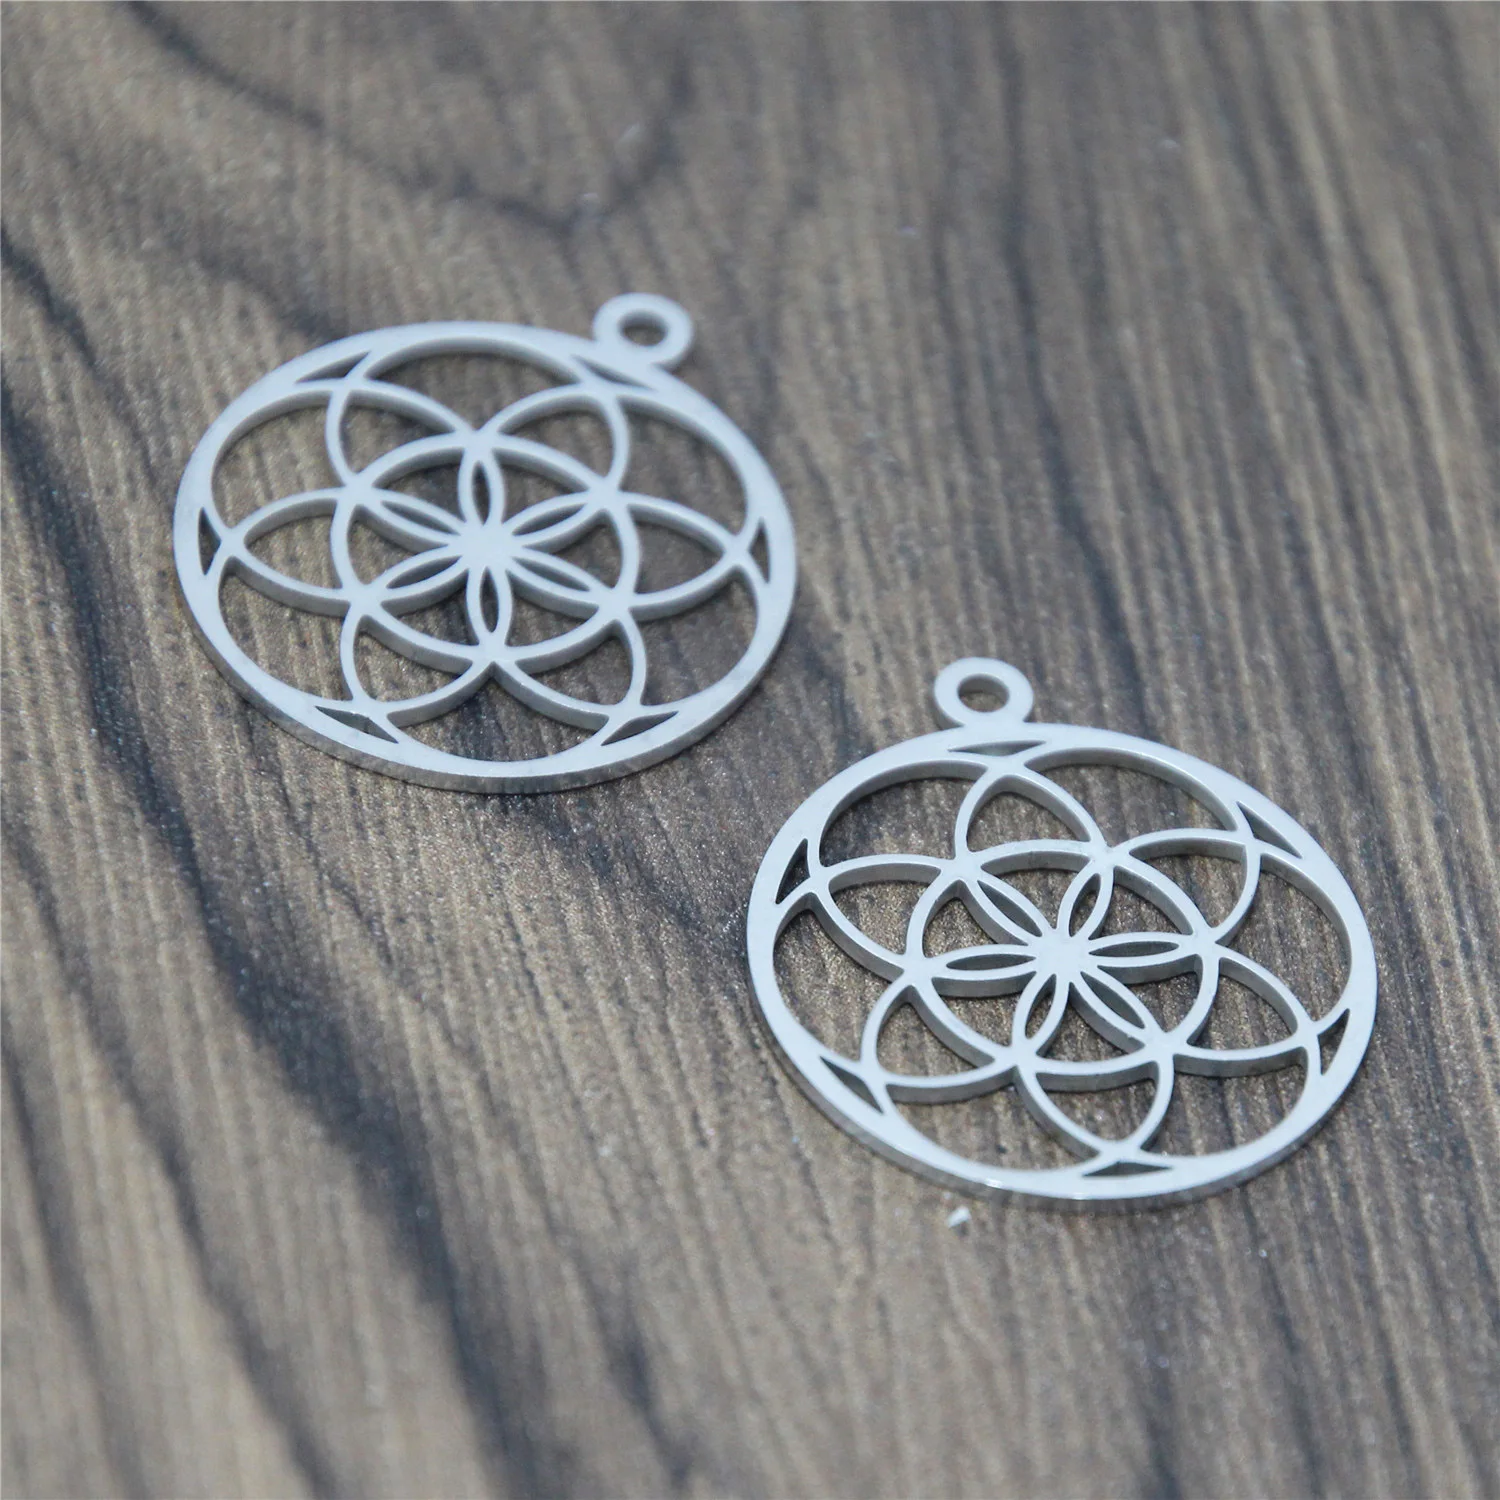 

5pcs/lot Fibonacci Seed of Life charm Flower of Life Logo Emblem Amulet Talisman Stainless steel Charm pendant 28x25mm